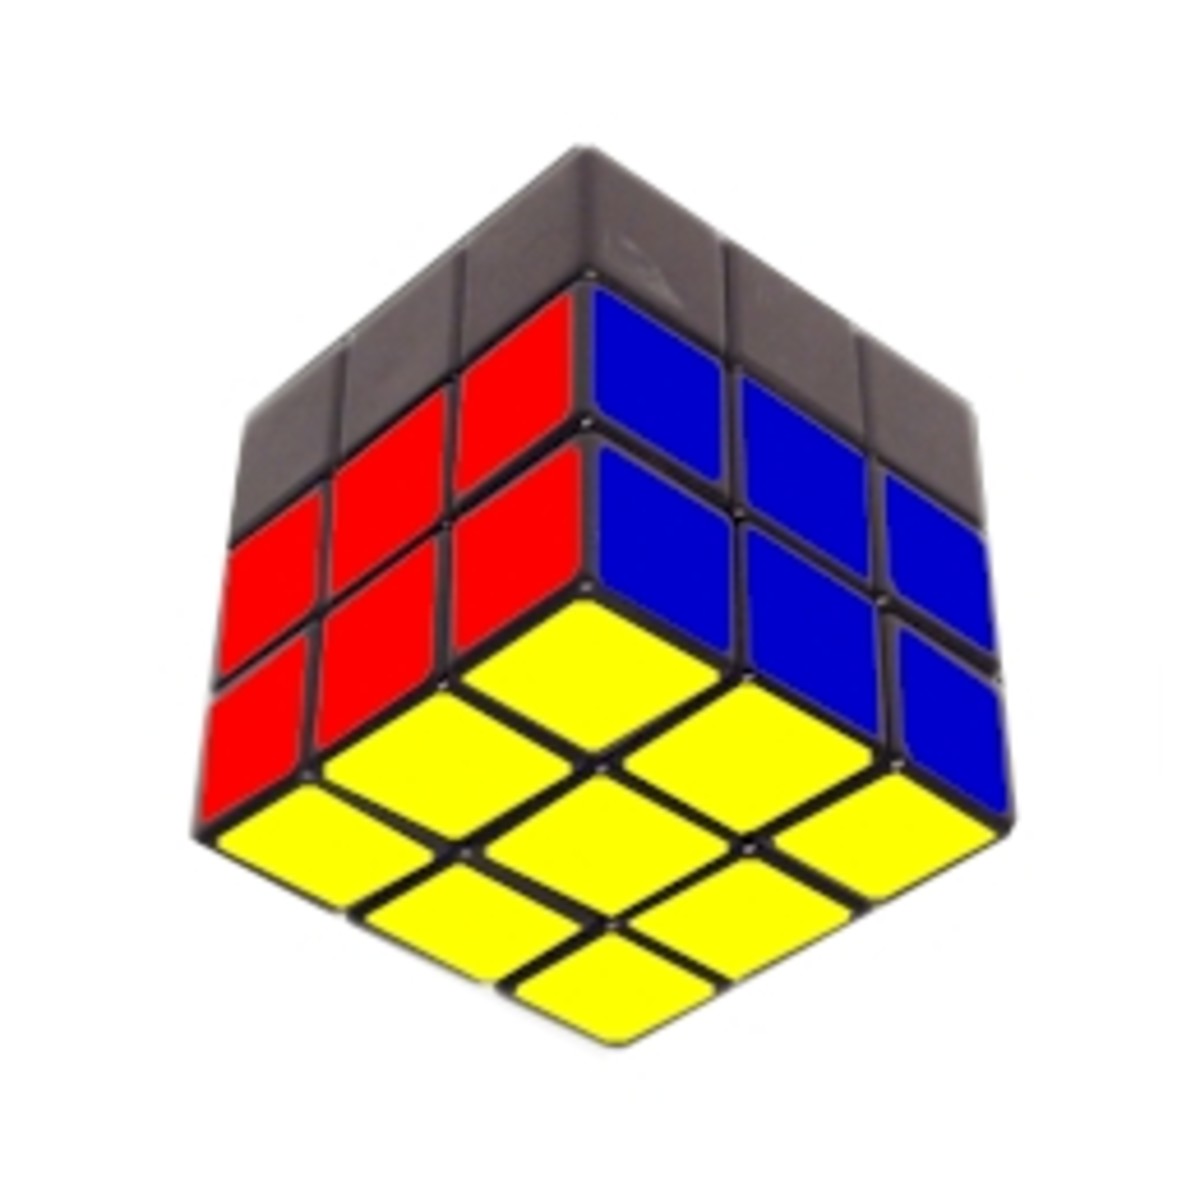 solve_a_rubiks_cube